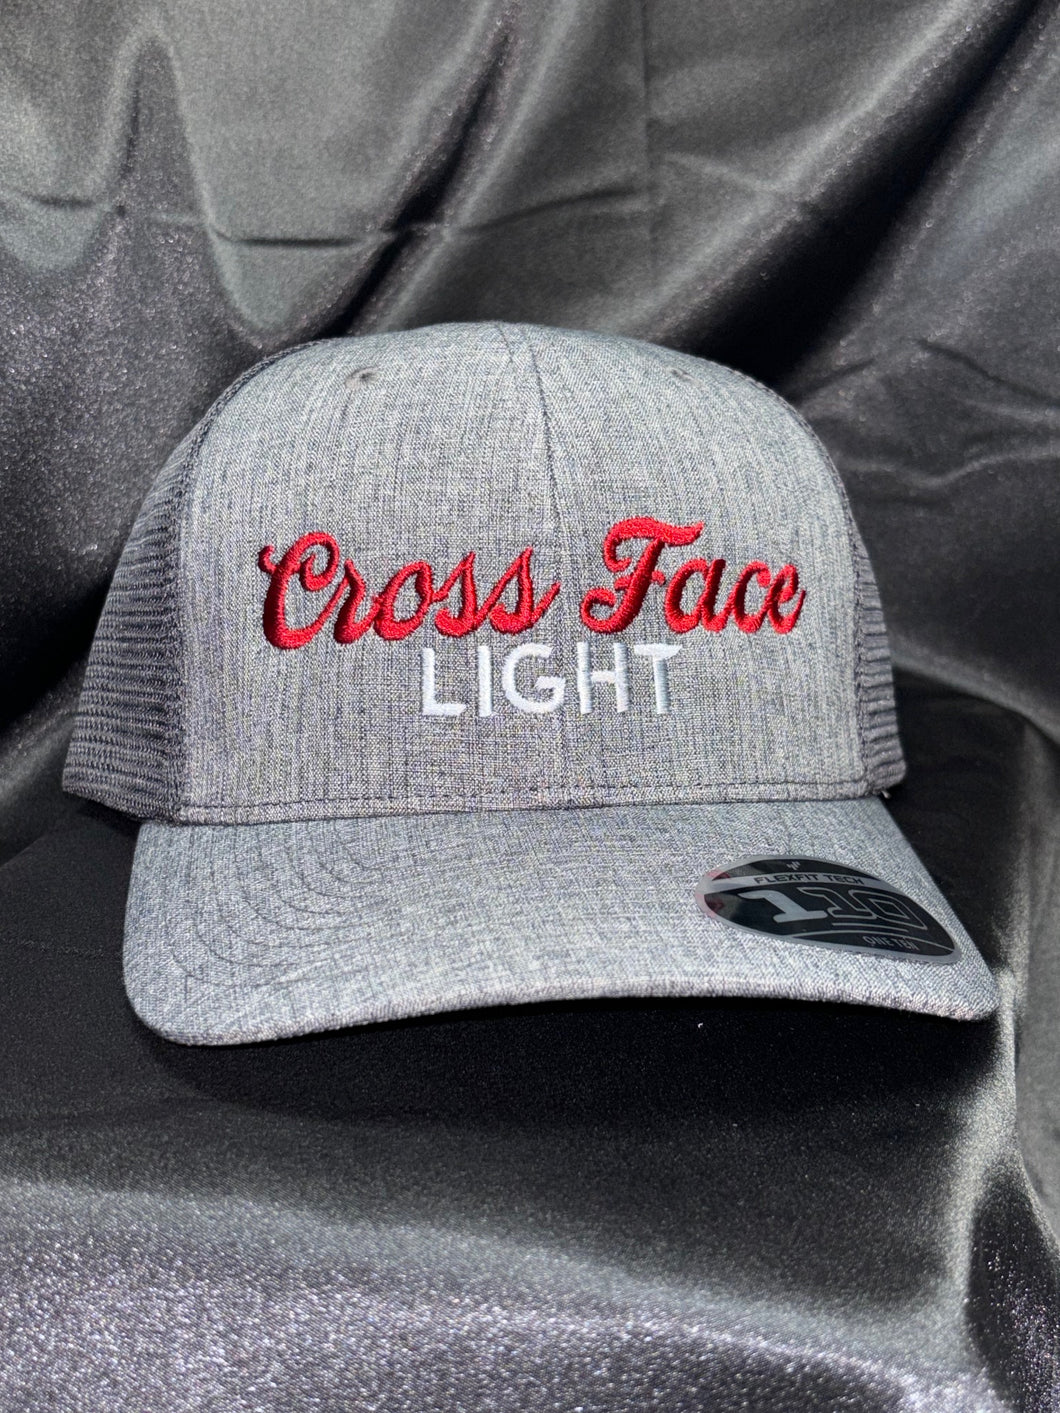 'Cross Face Light' Flexfit Trucker SnapBack Hat